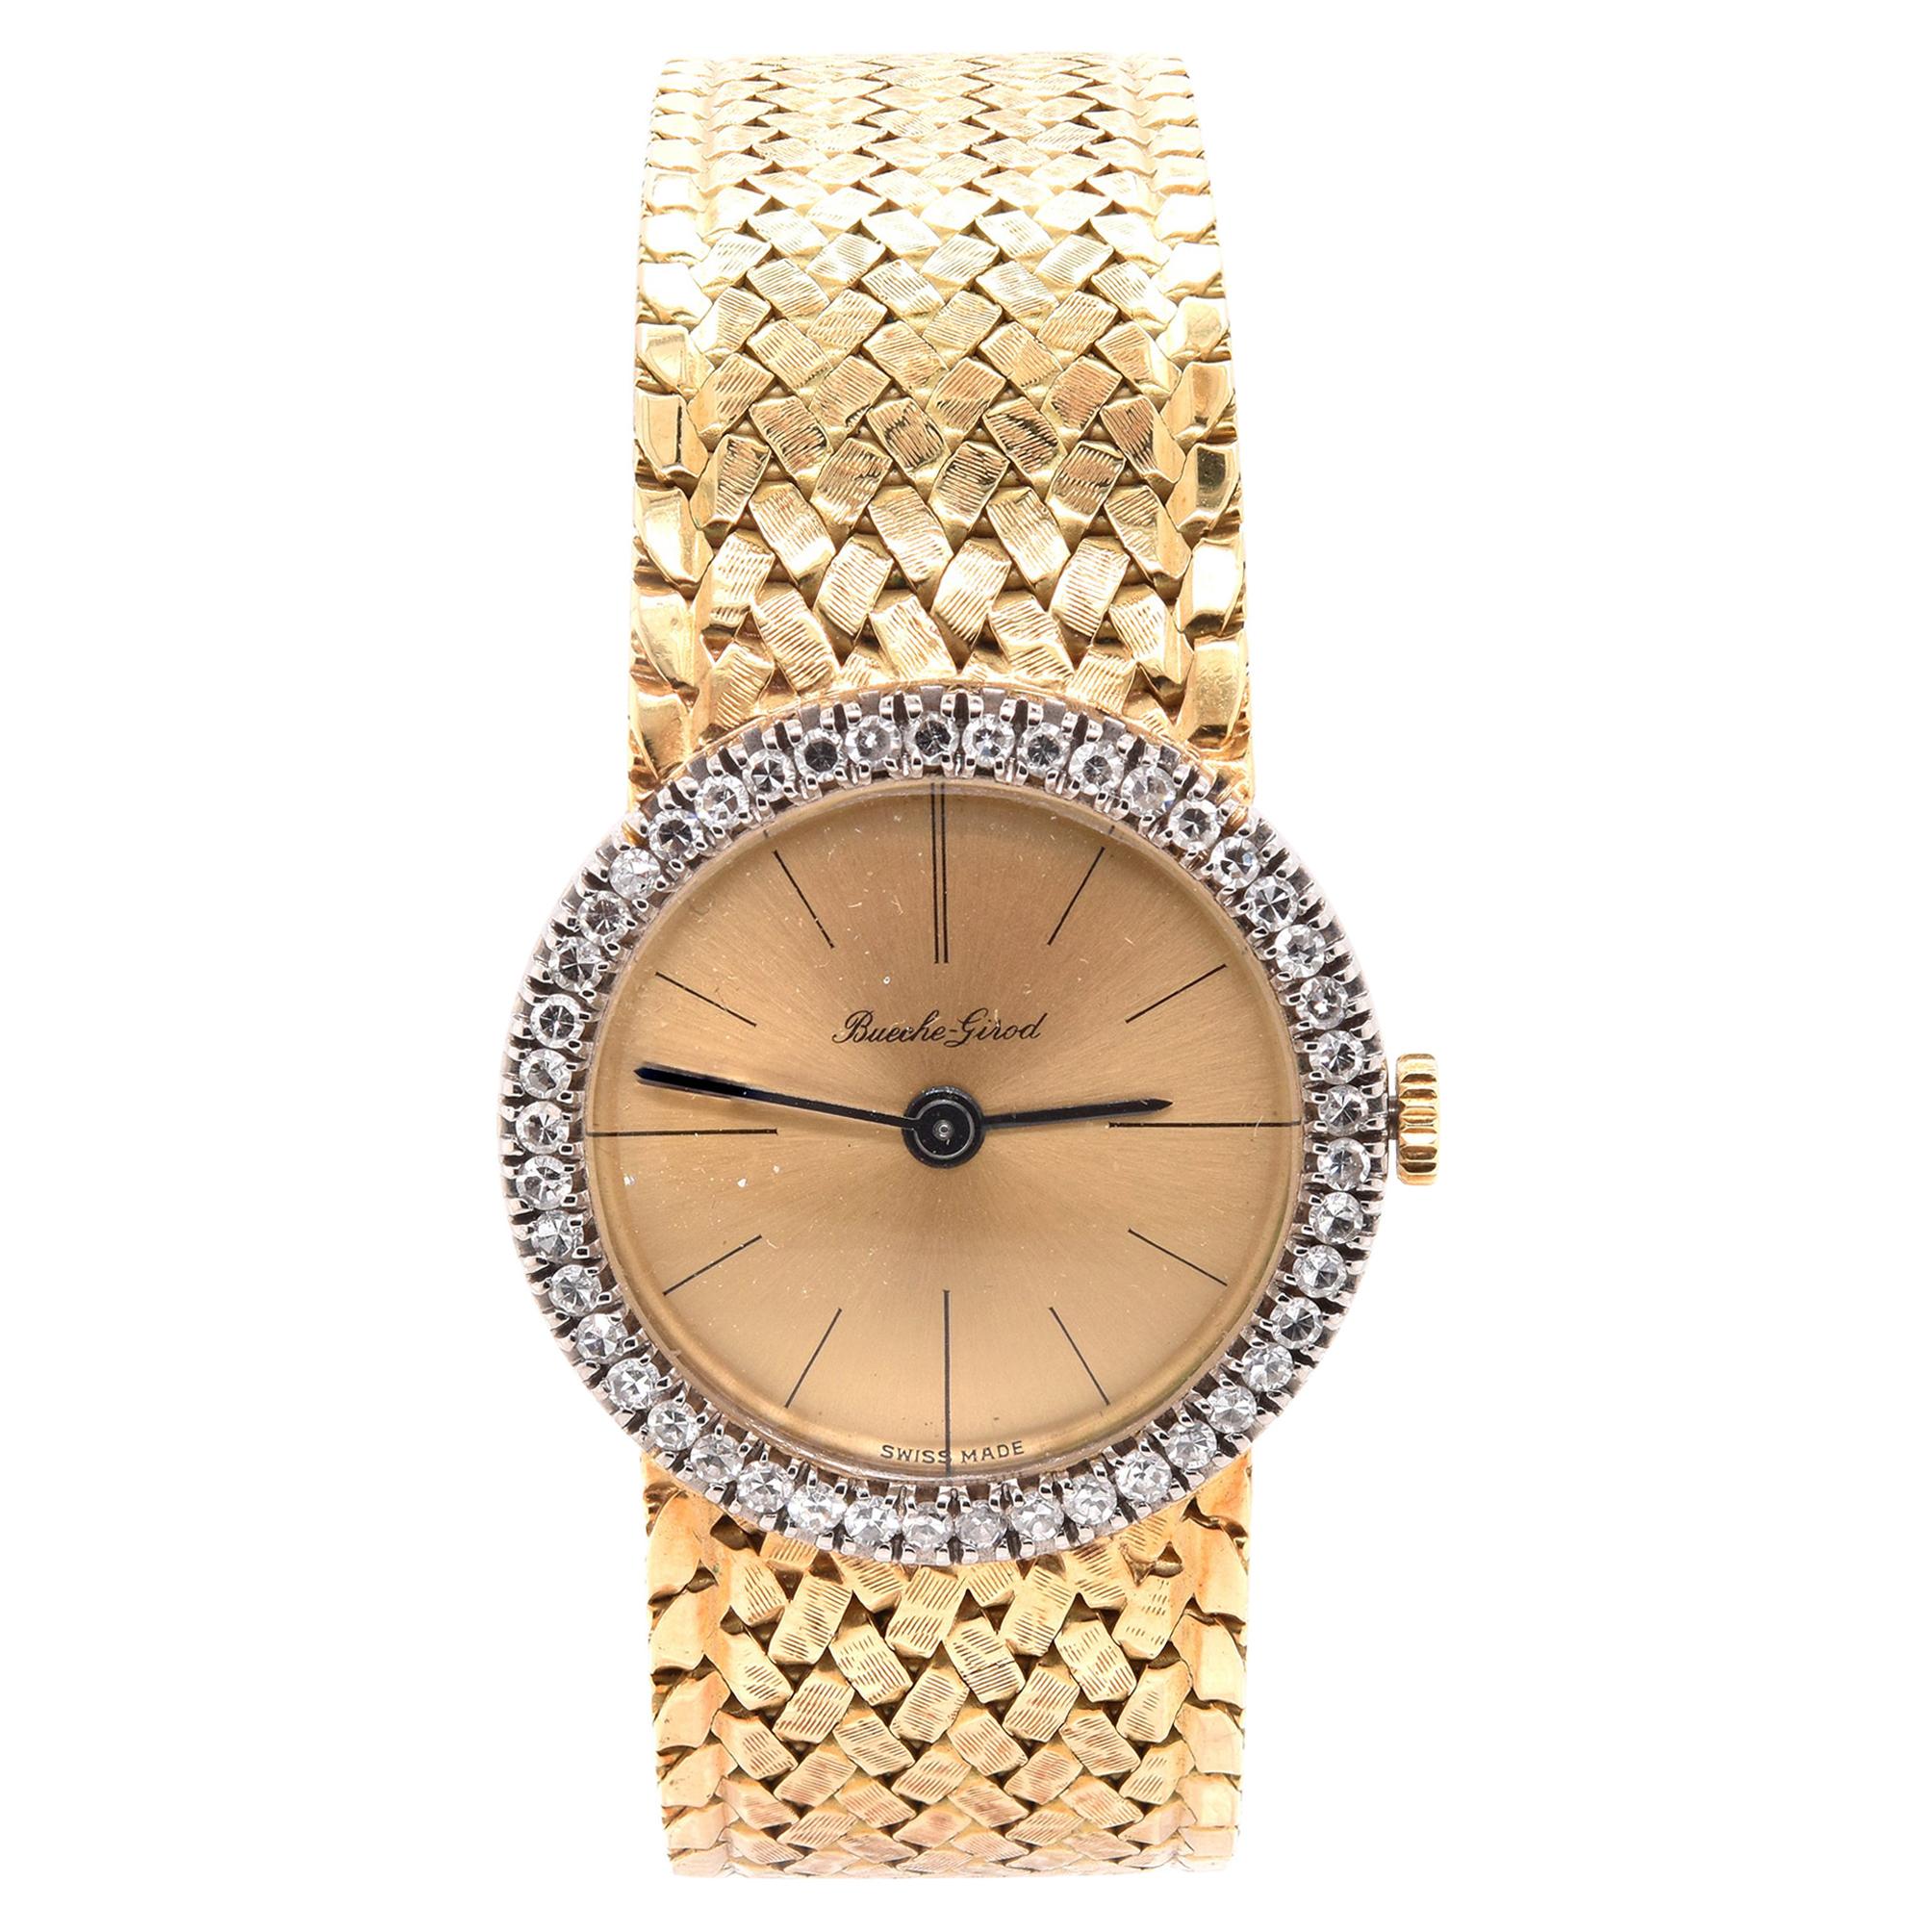 Bouche Girod 18 Karat Yellow Gold Vintage Ladies Diamond Watch For Sale